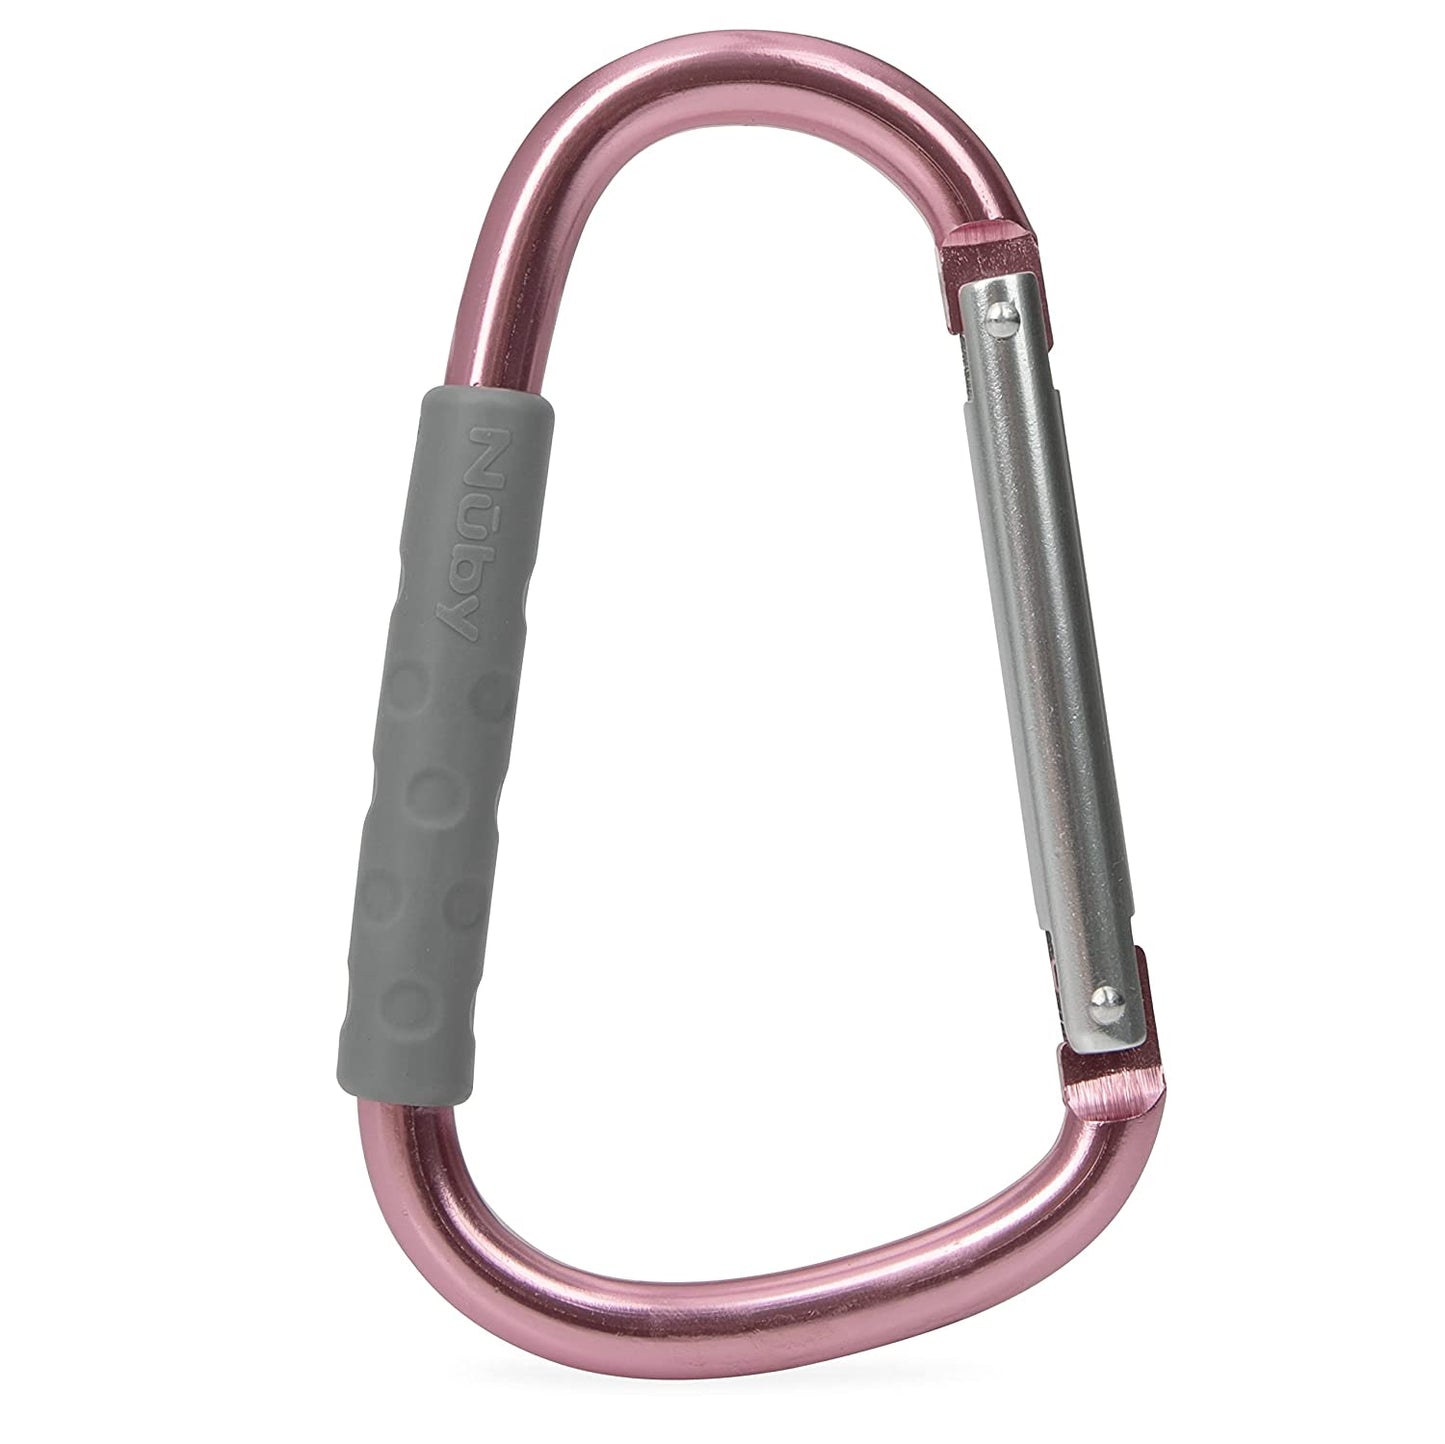 Nuby Large Handy Hook Carabiner Stroller Clip with Textured Soft Grip: Rose Gold